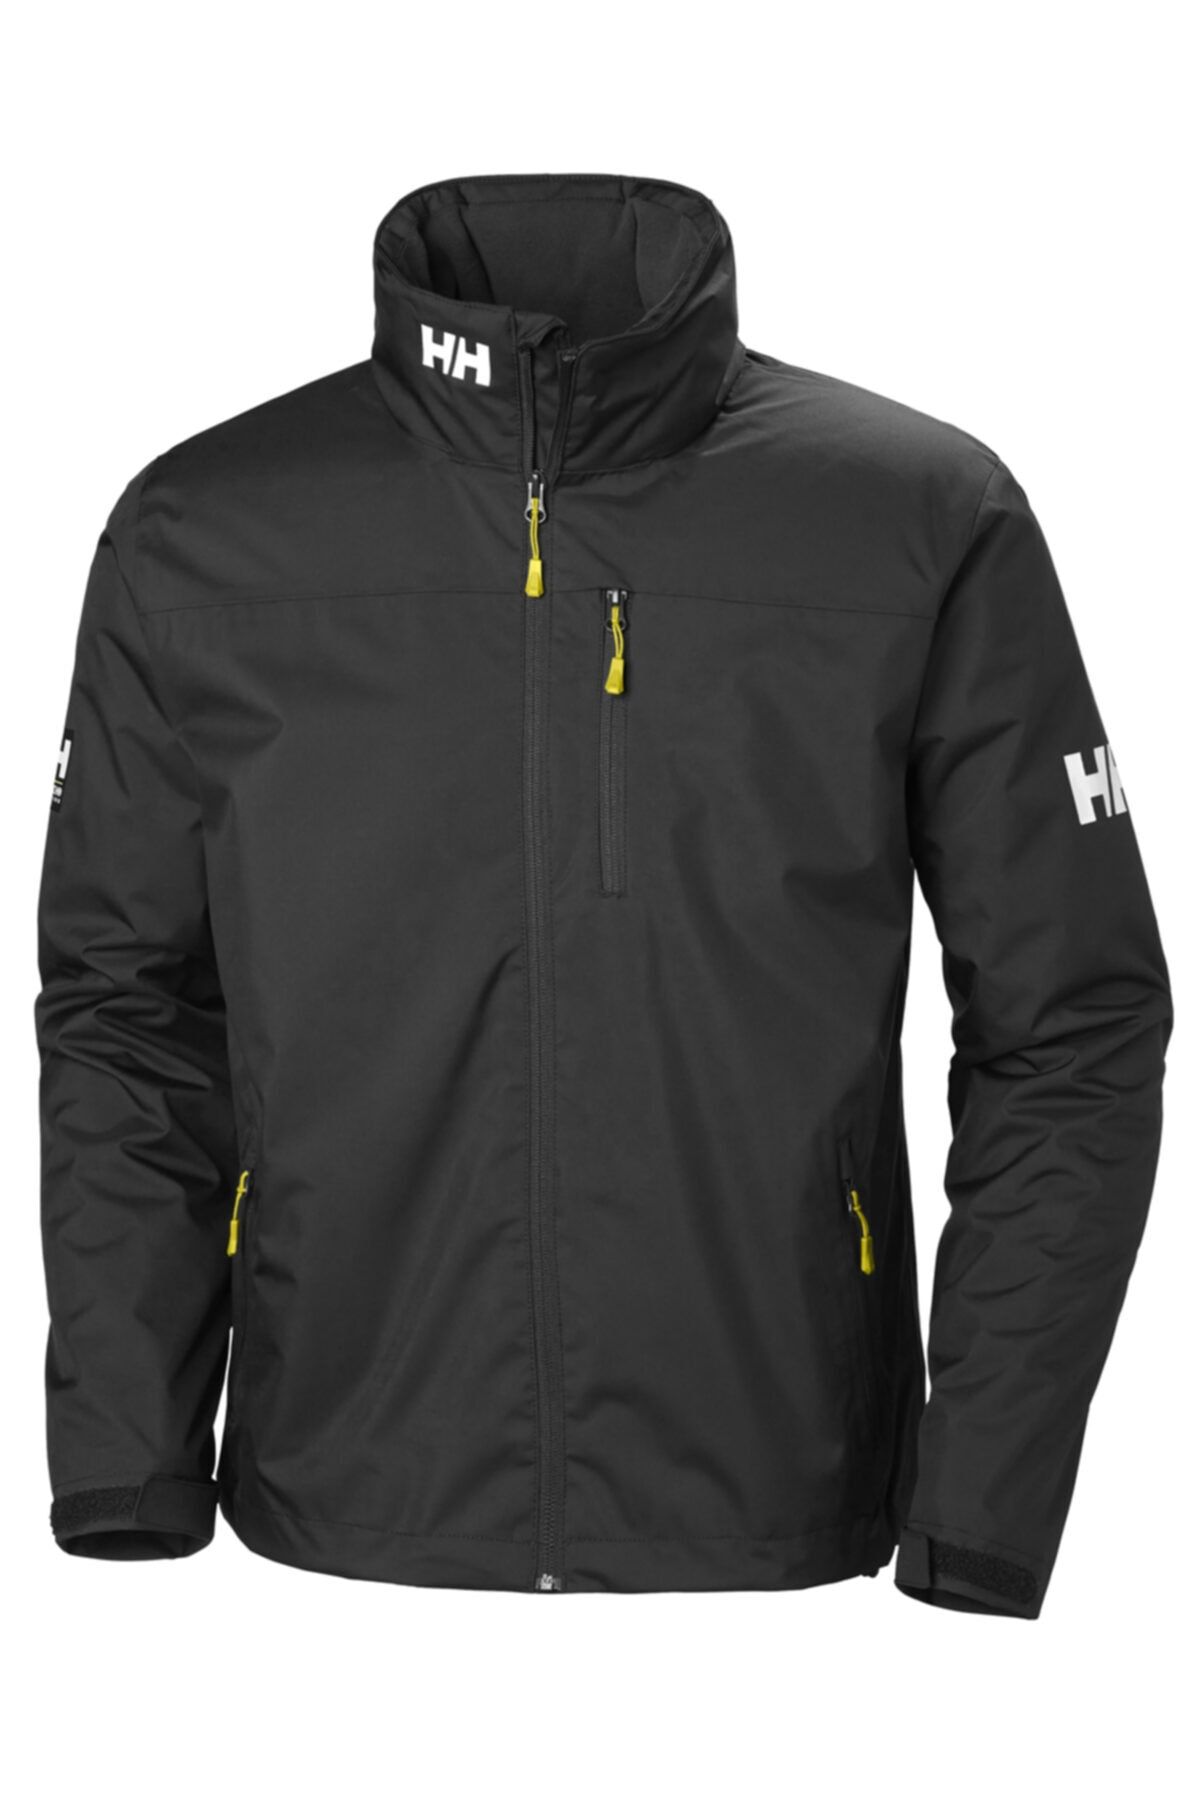 Helly Hansen Hha.33874 - Crew Hooded Midlayer Jacket